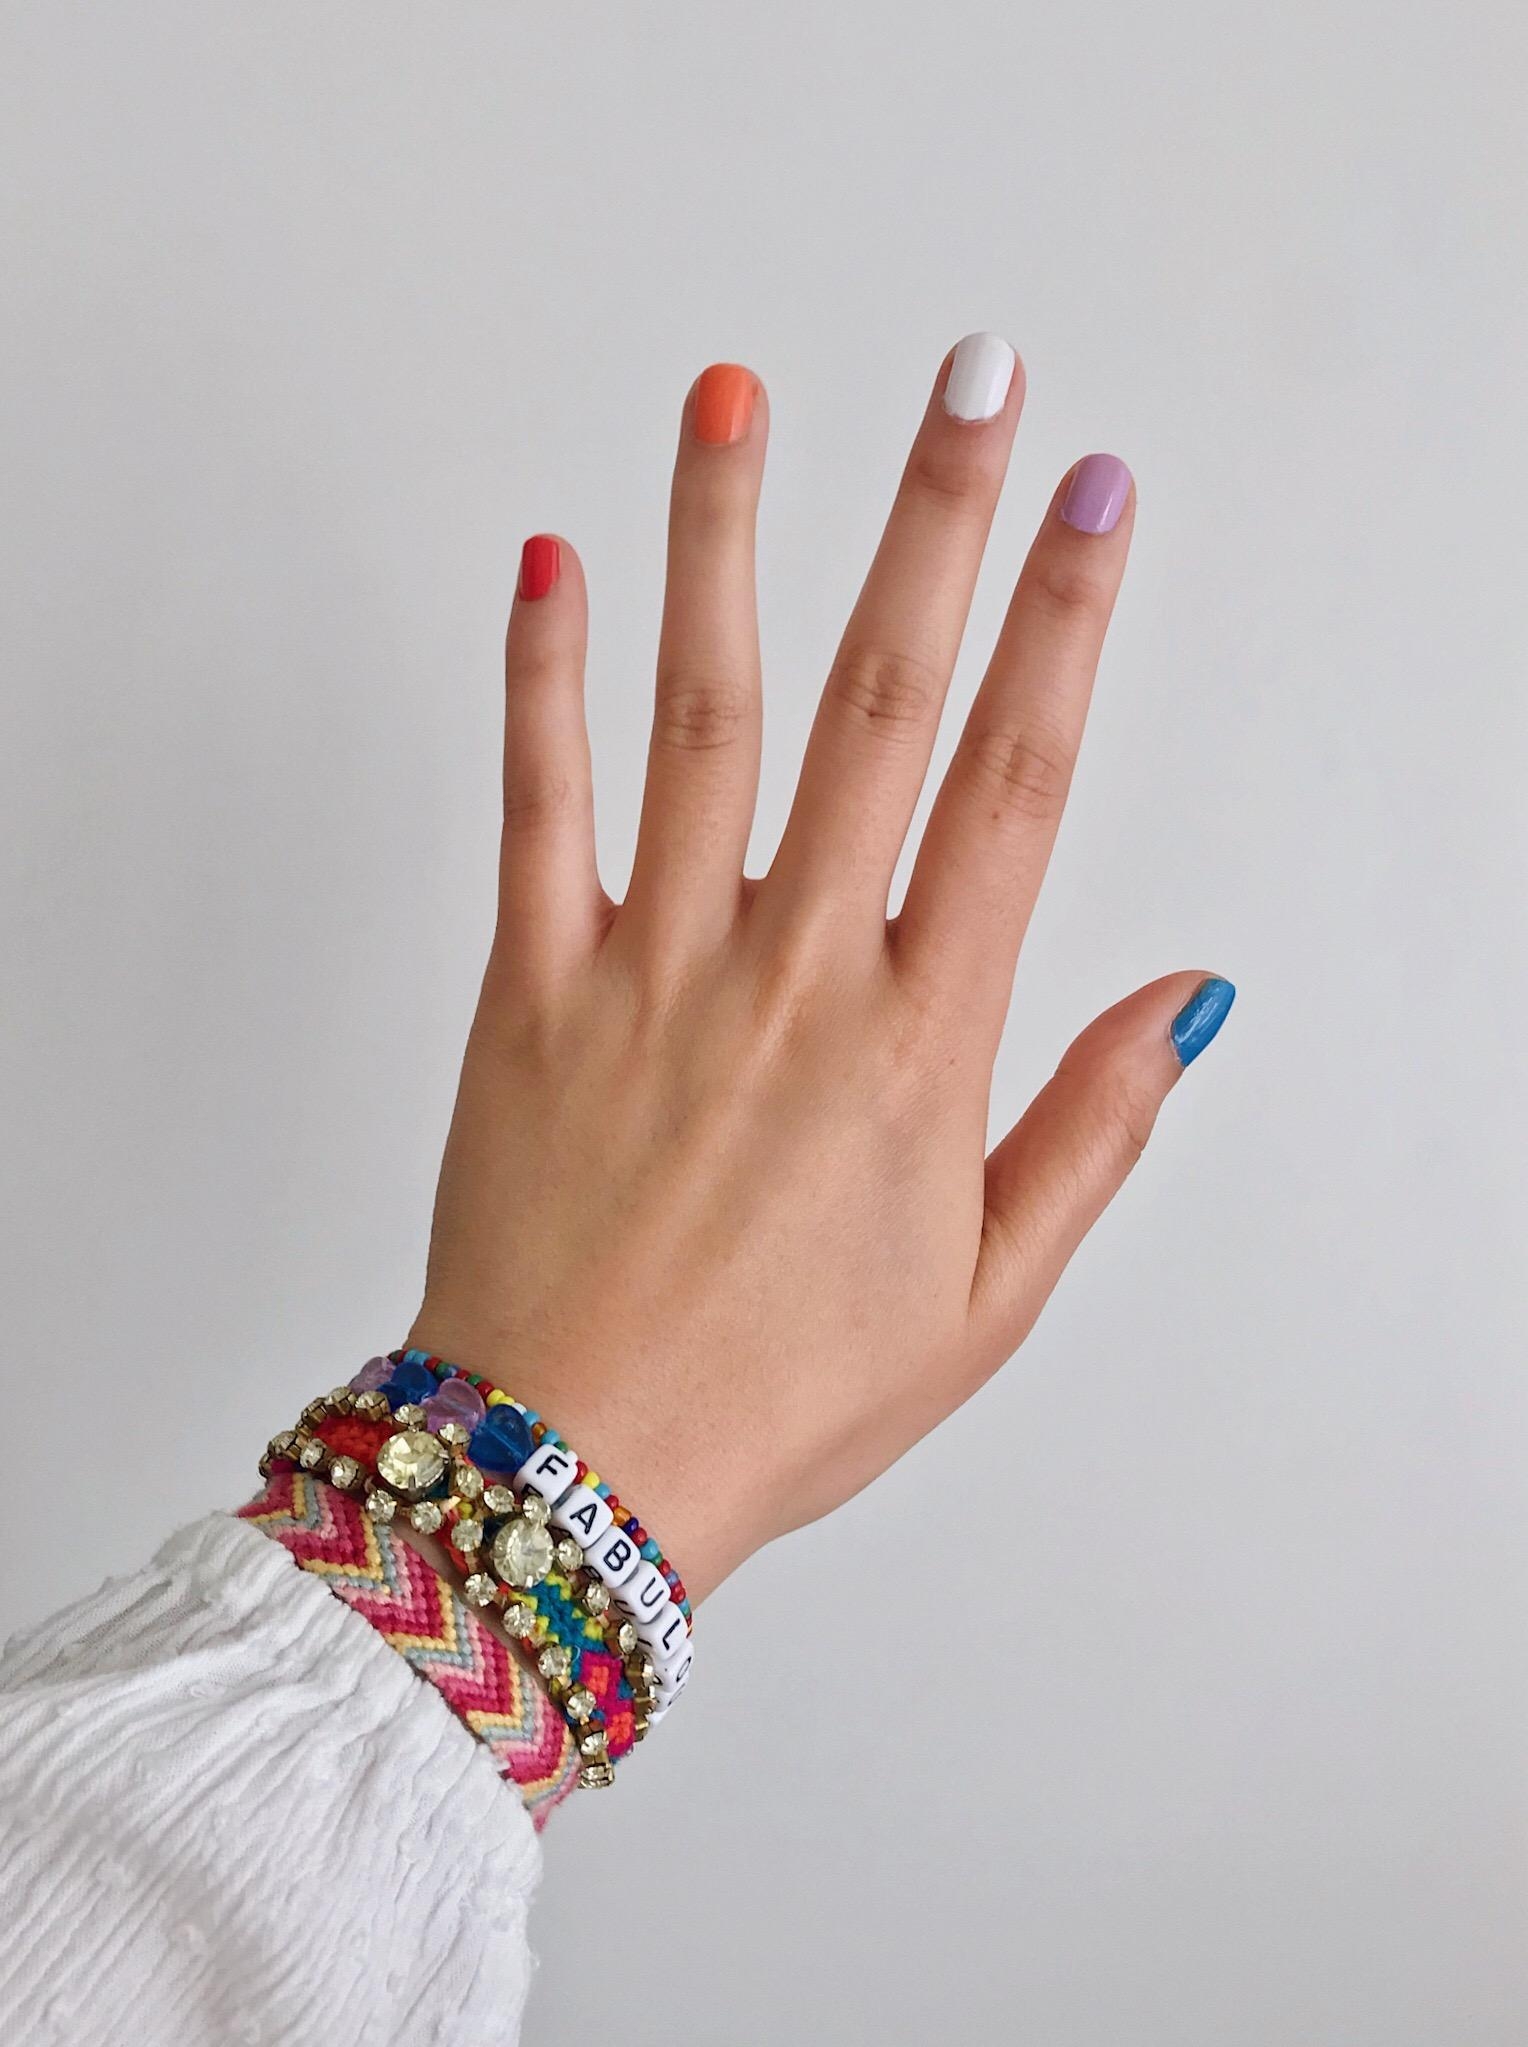 Gestylt bis in die Fingerspitzen #multicolorednails #rainbownails #fashionchallenge #accessoires